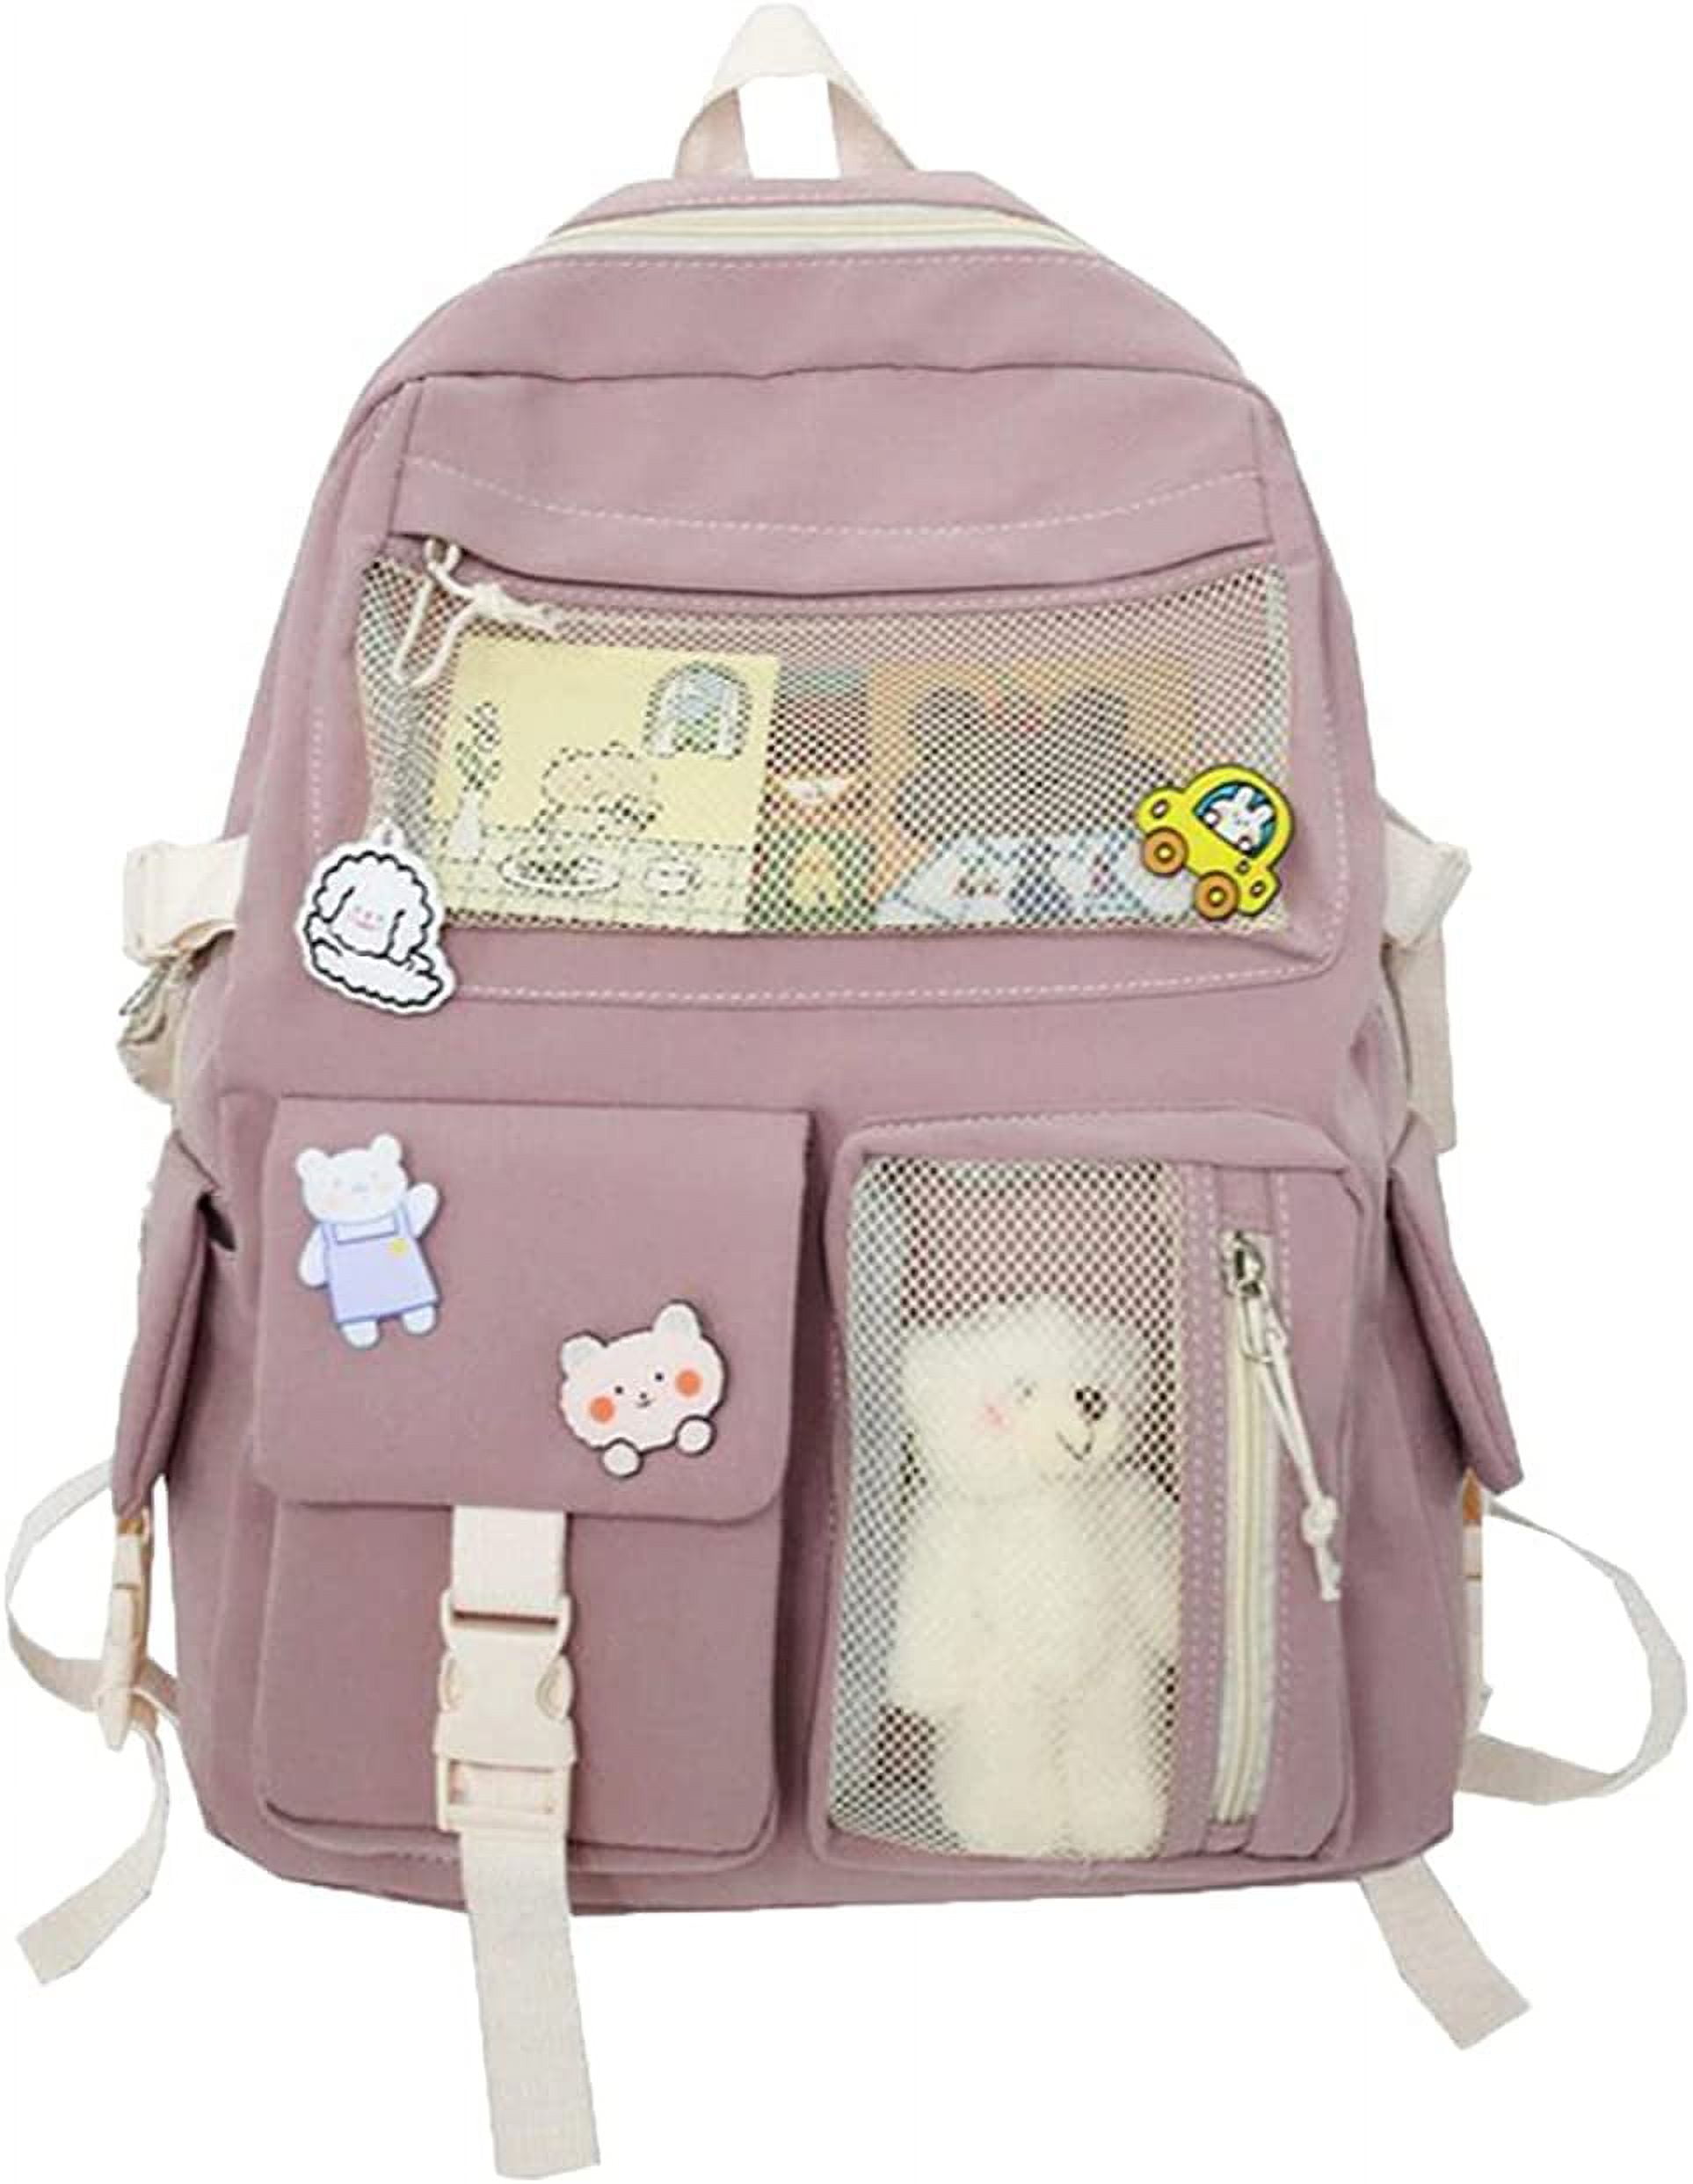 PIKADINGNIS Kawaii Backpack with Kawaii Pin and Accessories Cute